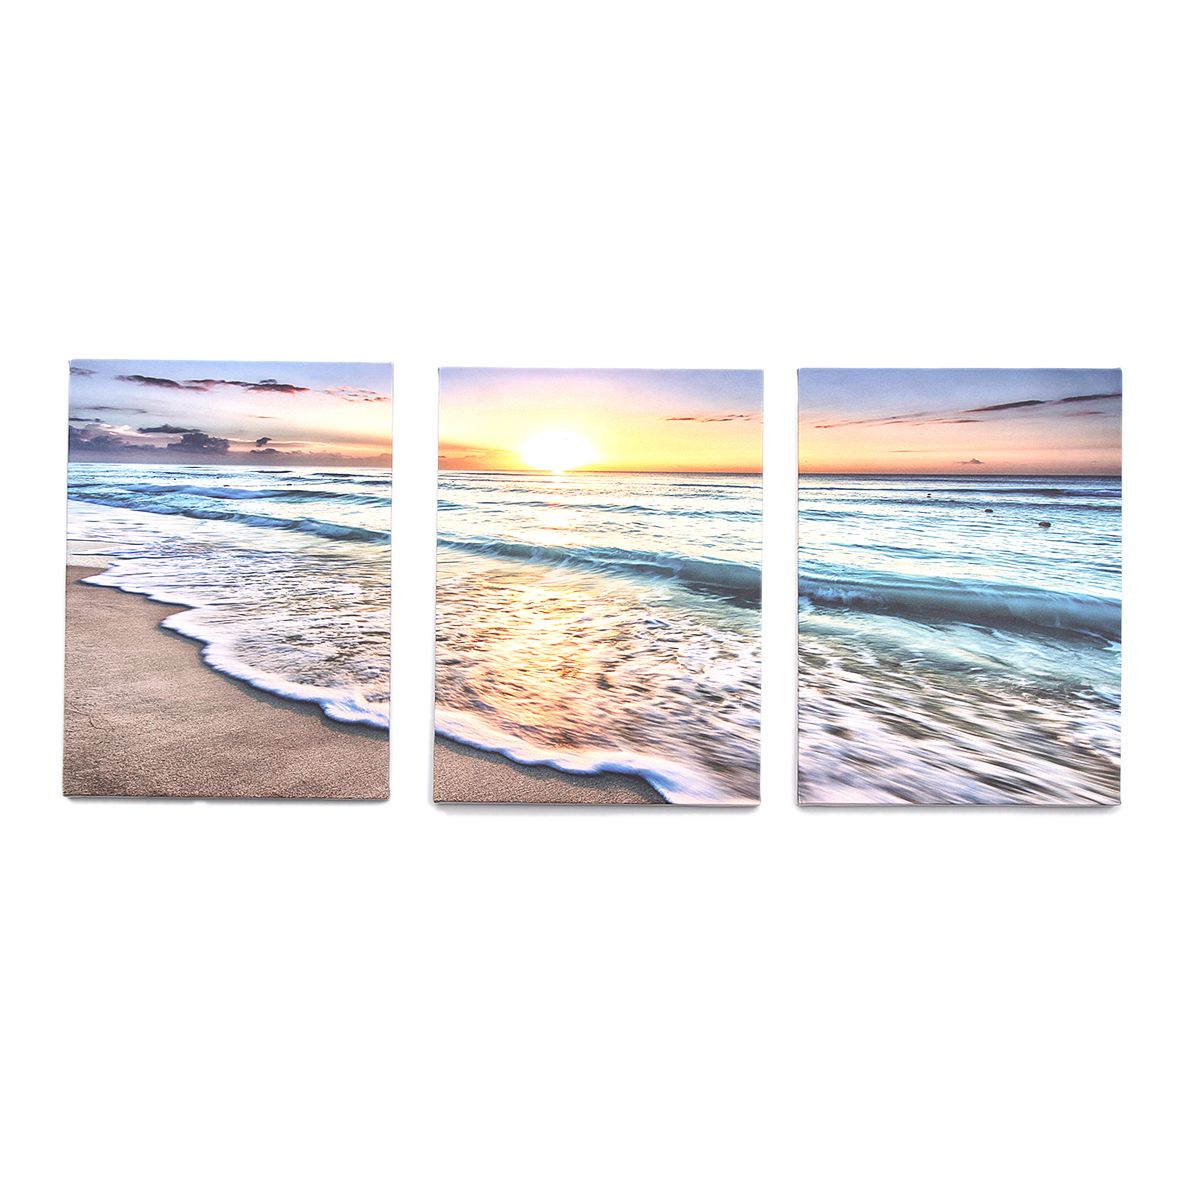 3 Panels Wall Art Canvas, Beach Sunset Sand Ocean Sea Wave Throughout Recent Wave Wall Art (View 15 of 20)